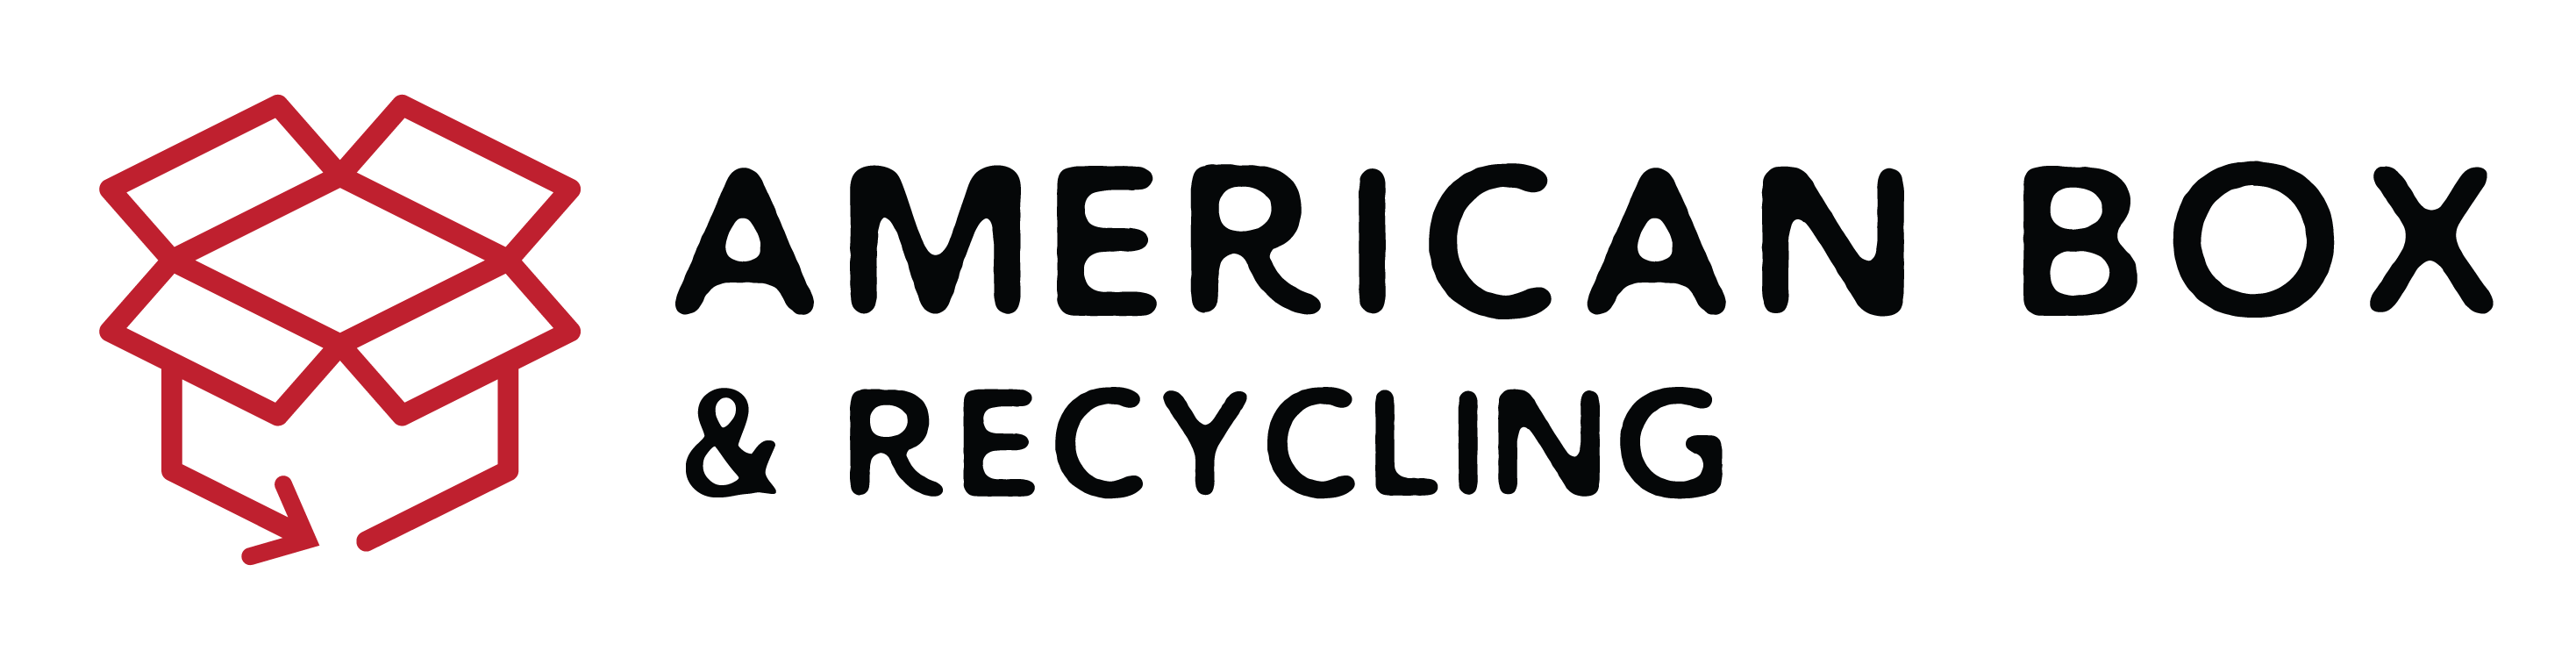 American Box & Recycling